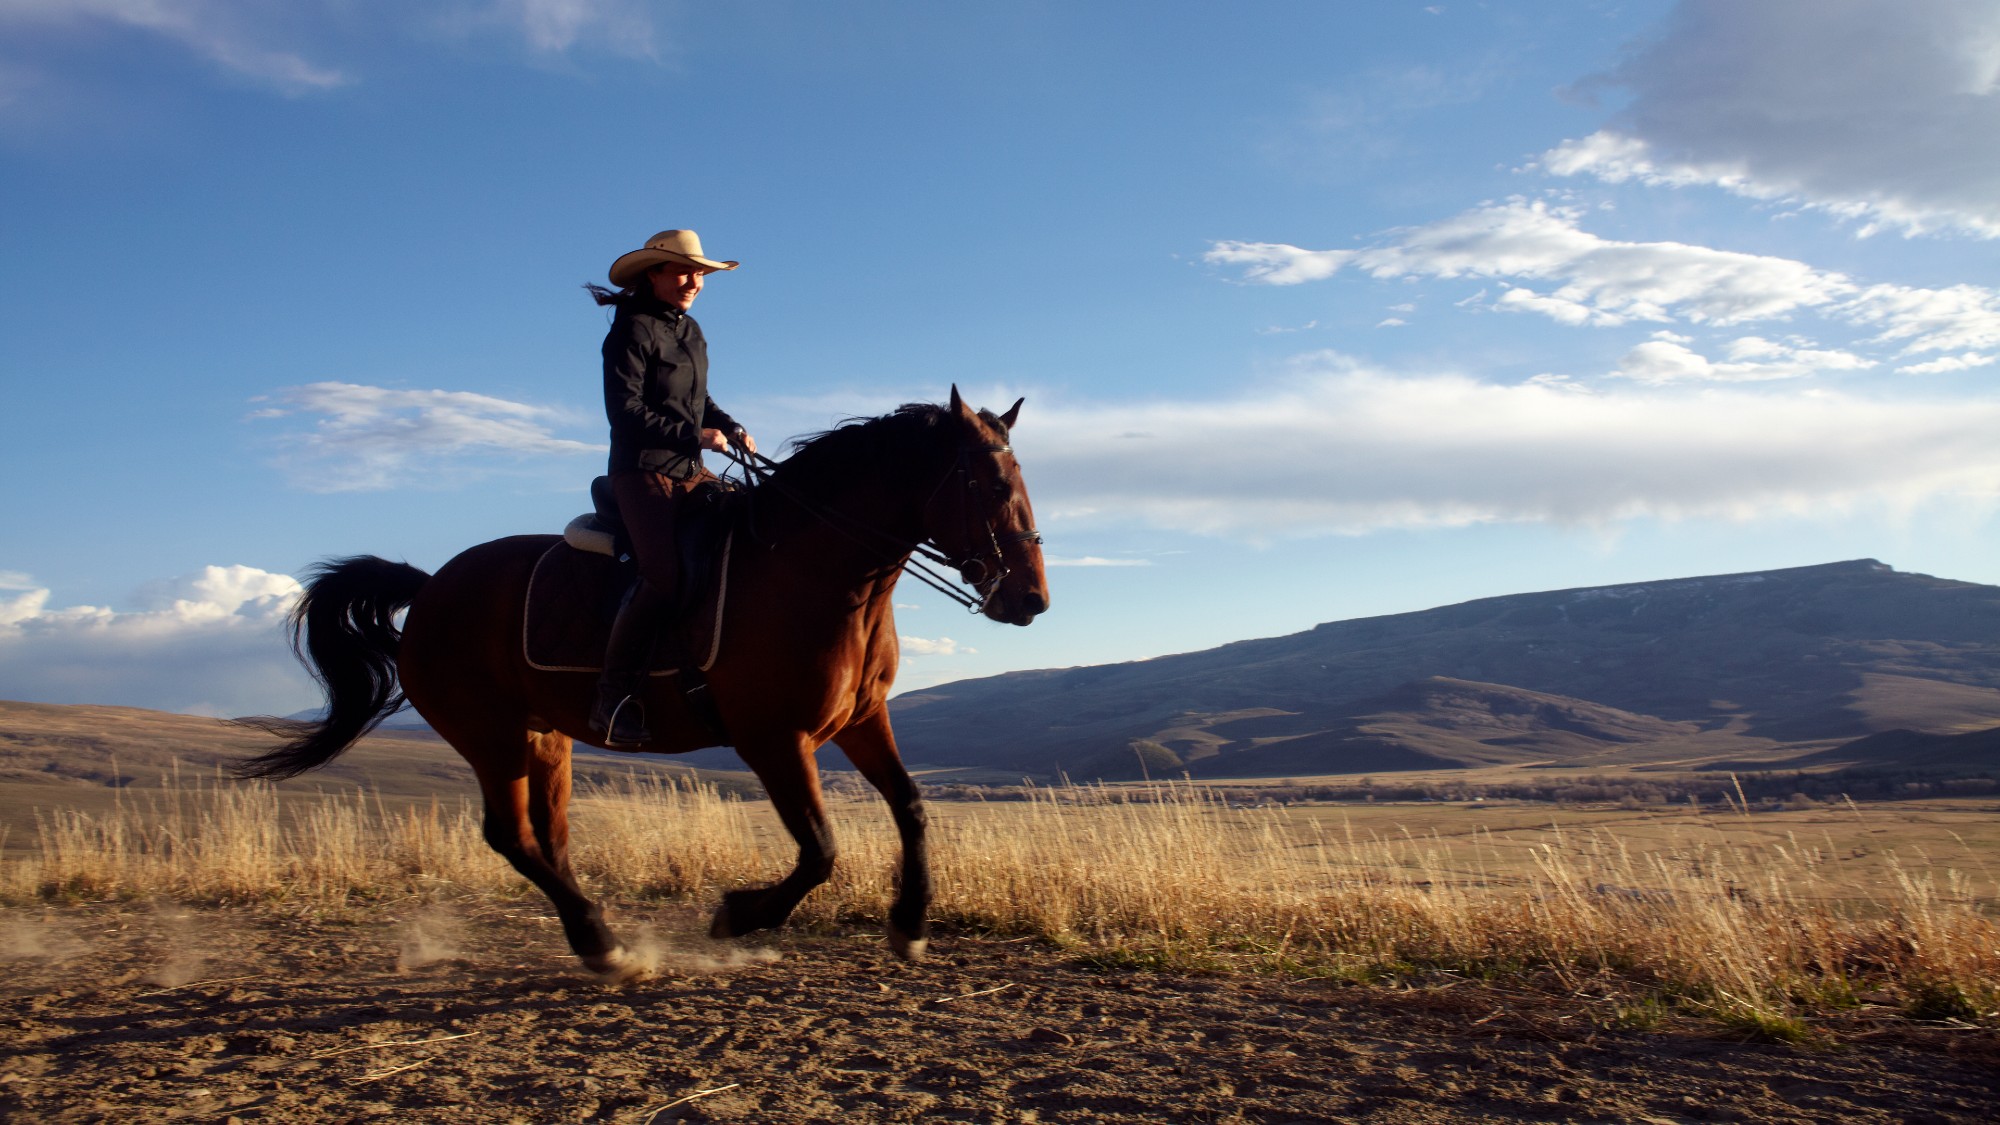 A woman rides a horse across a field in Colorado